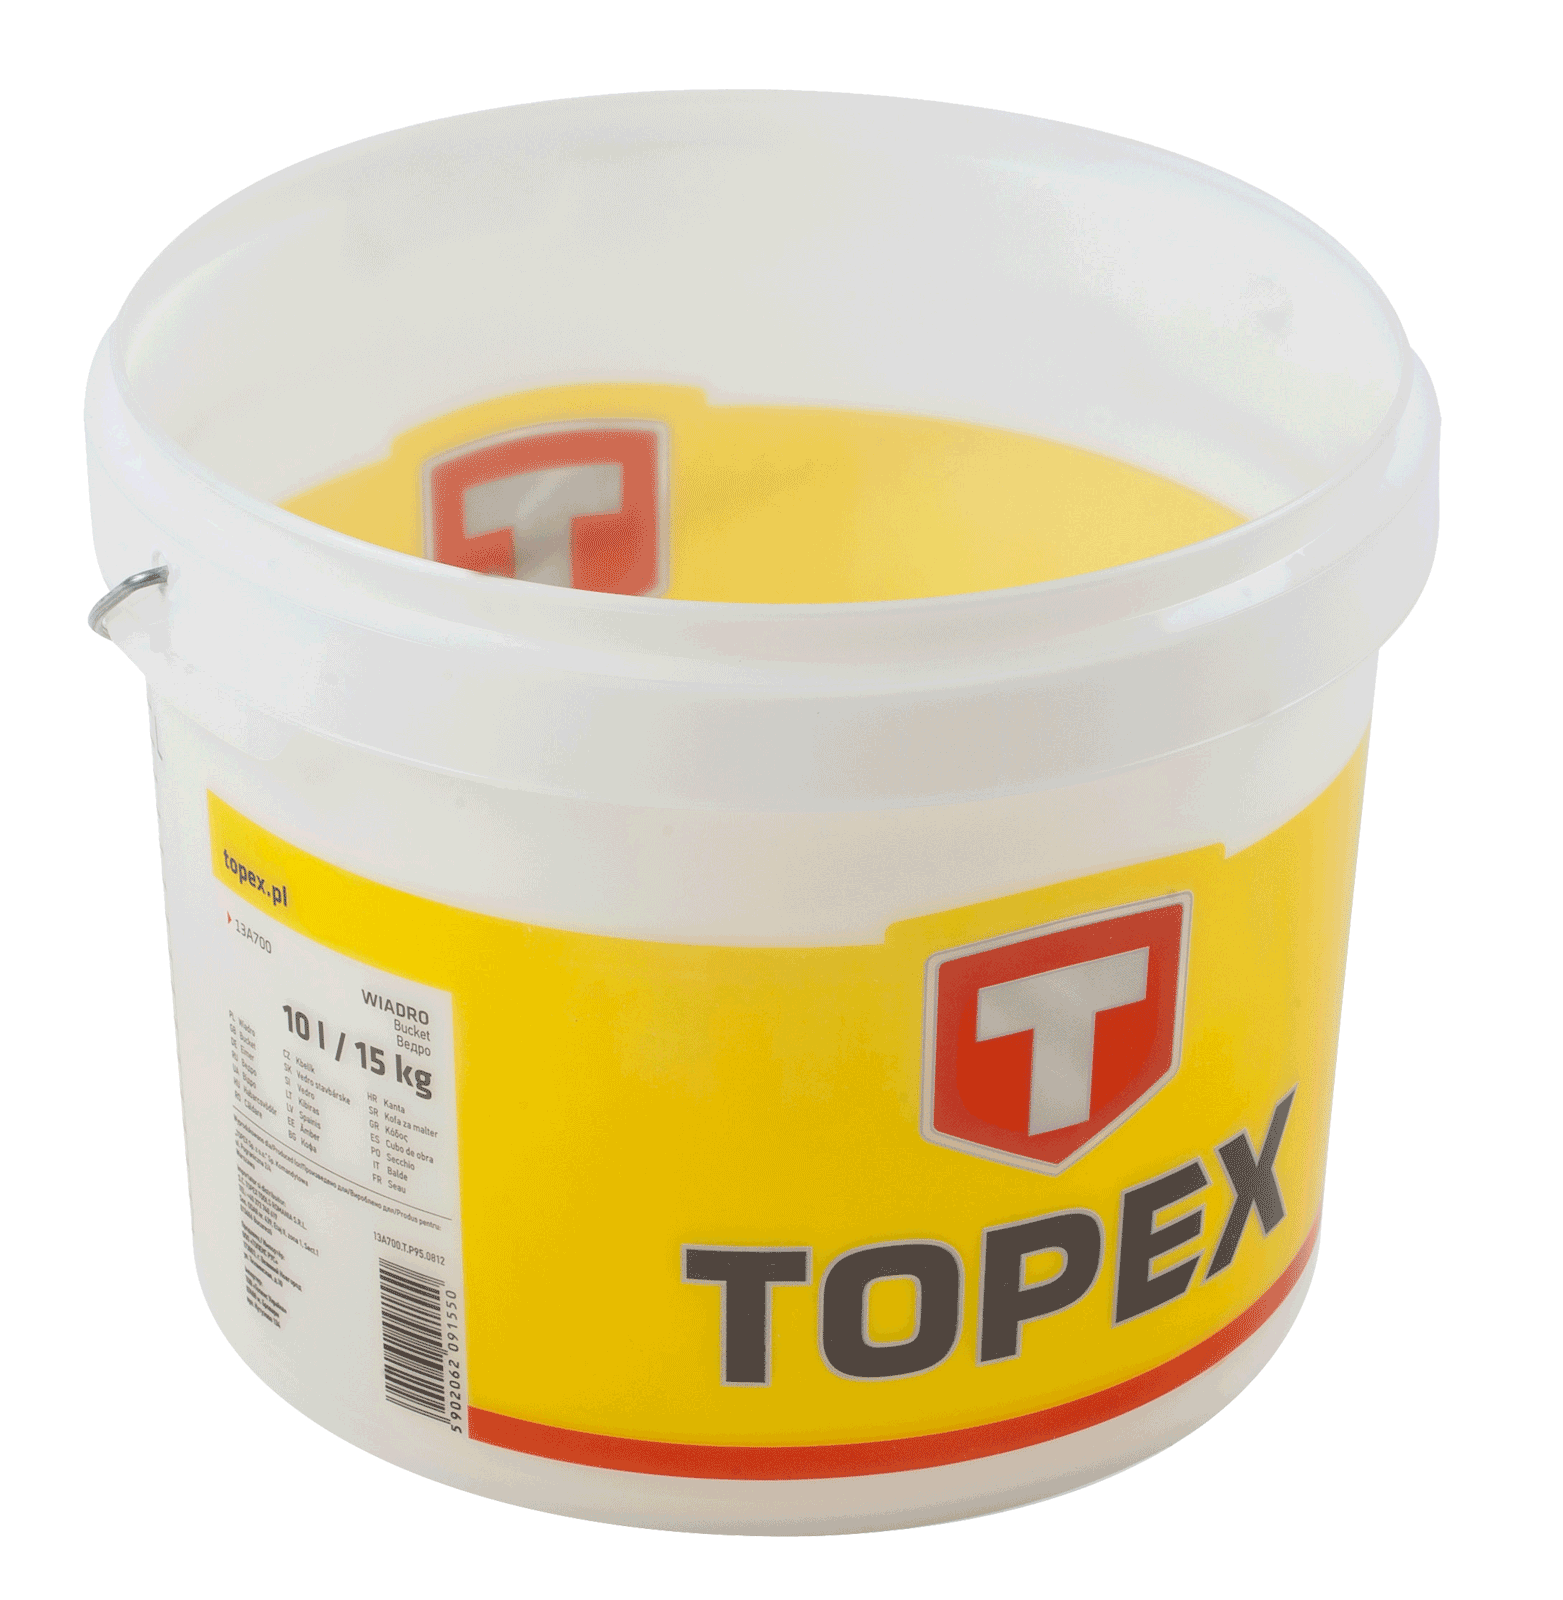 TOPEX PLASTIC BACKET 10L